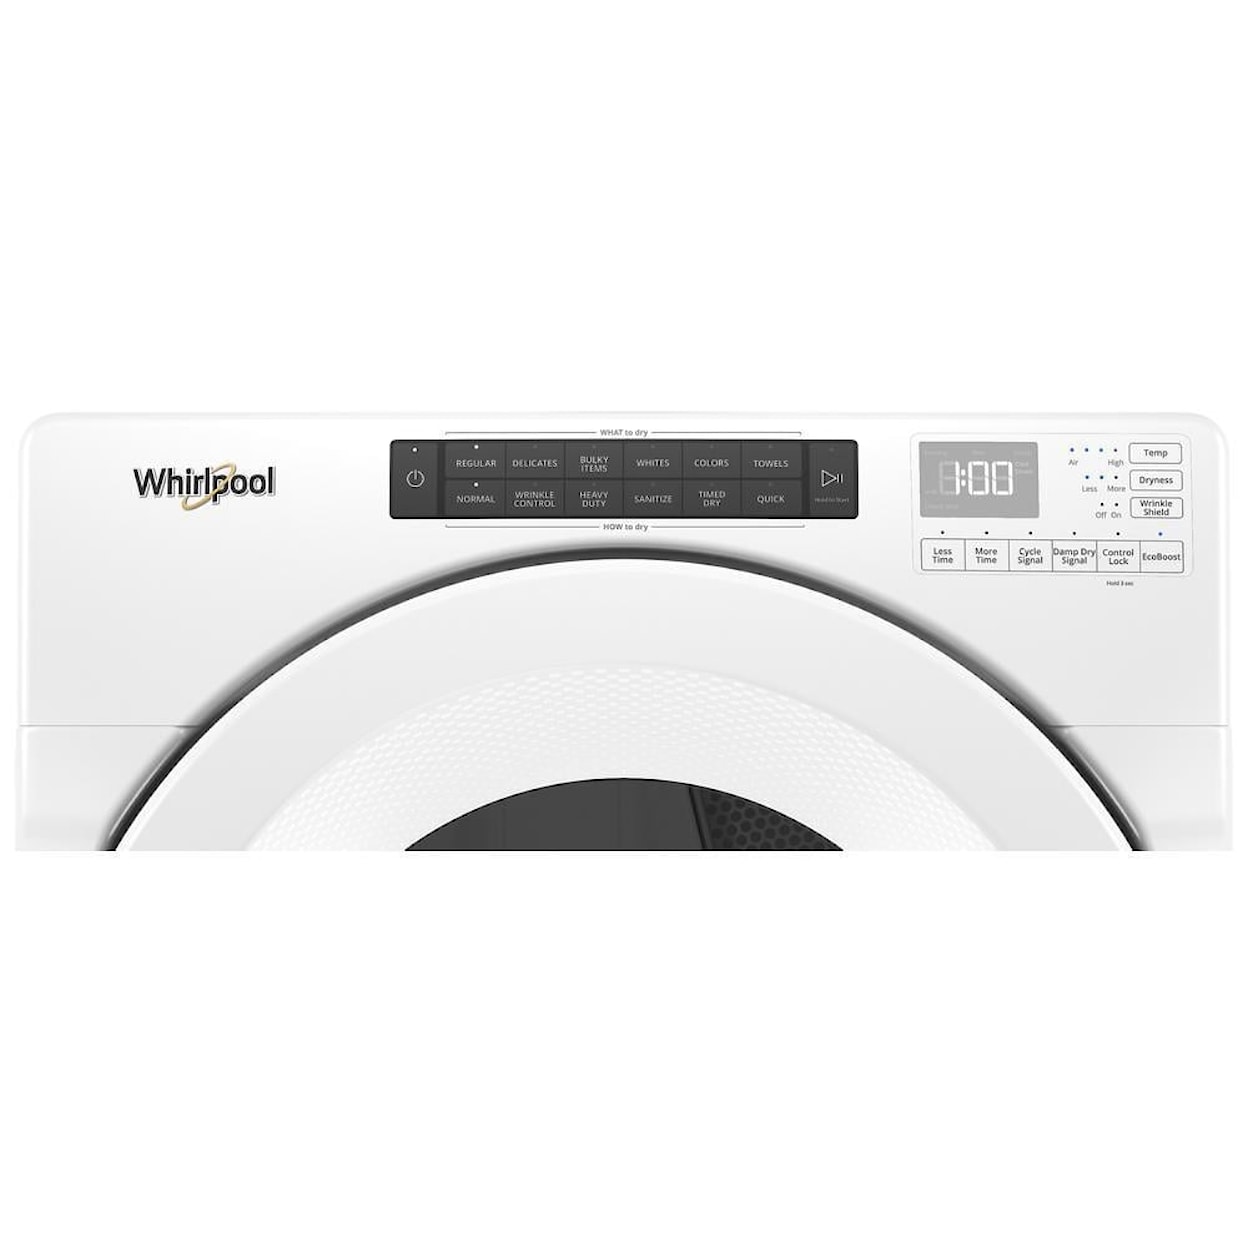 Whirlpool Laundry Dryer